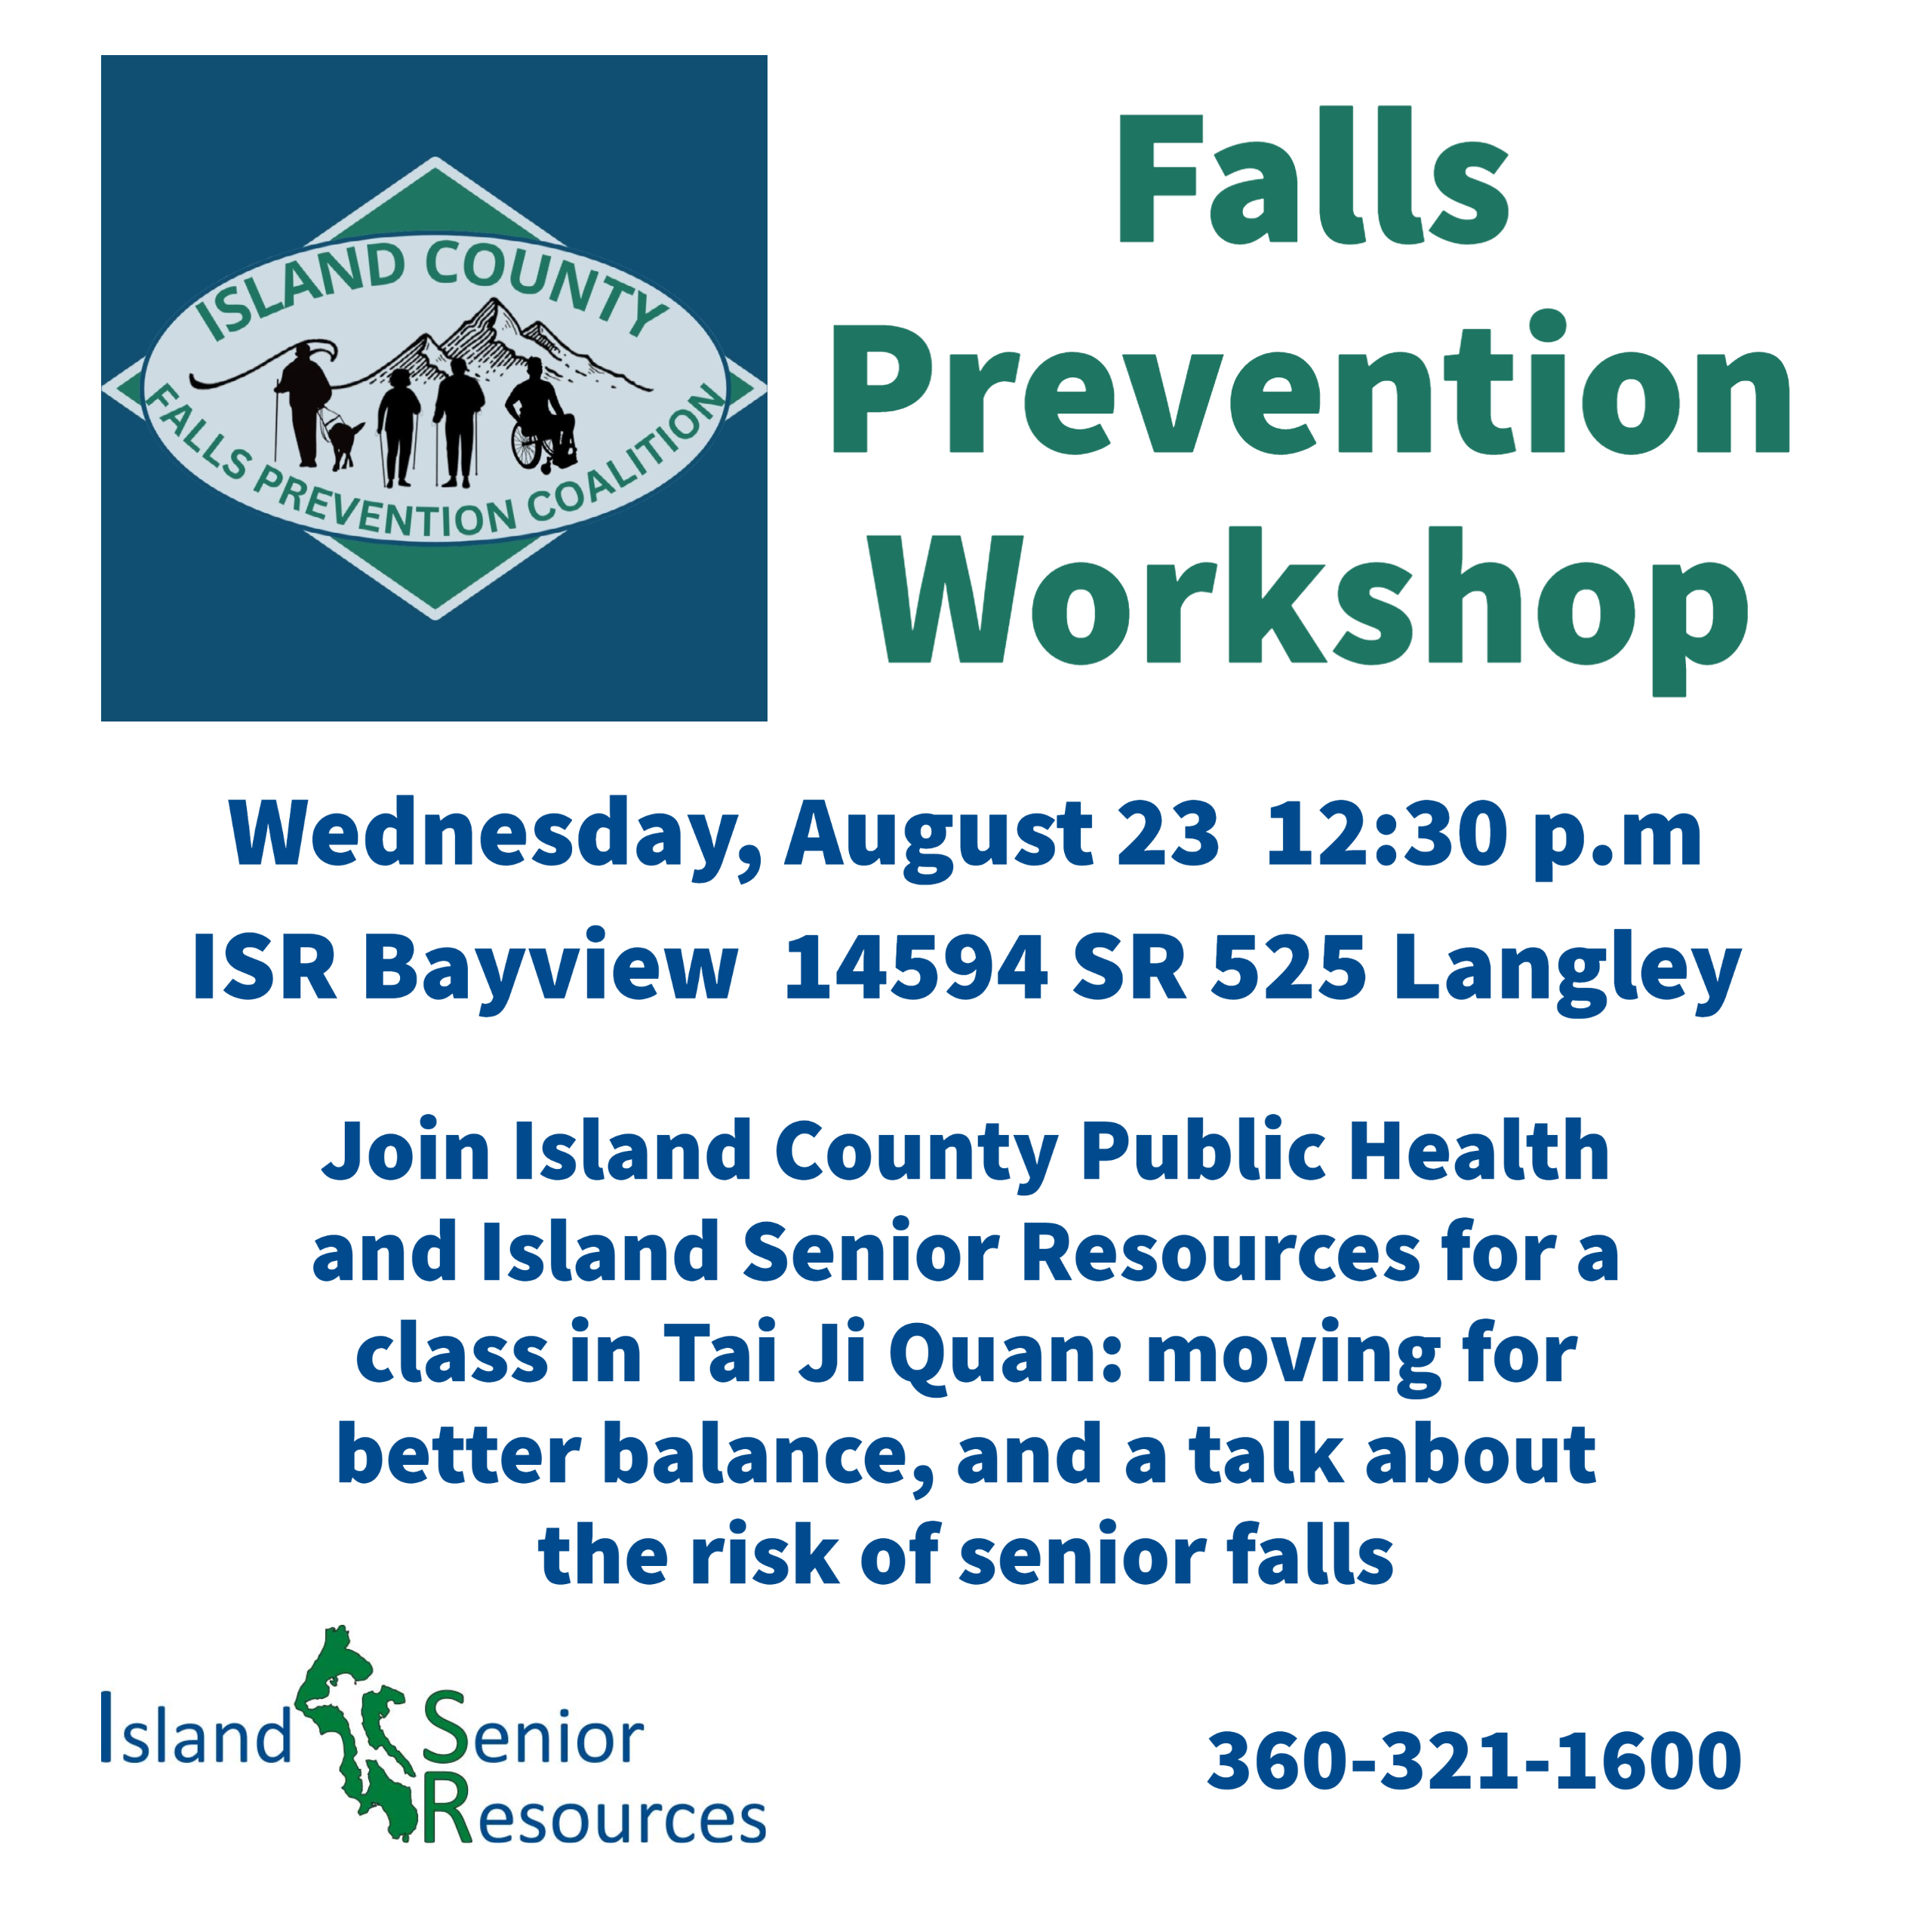 Falls Prevention Workshop in August